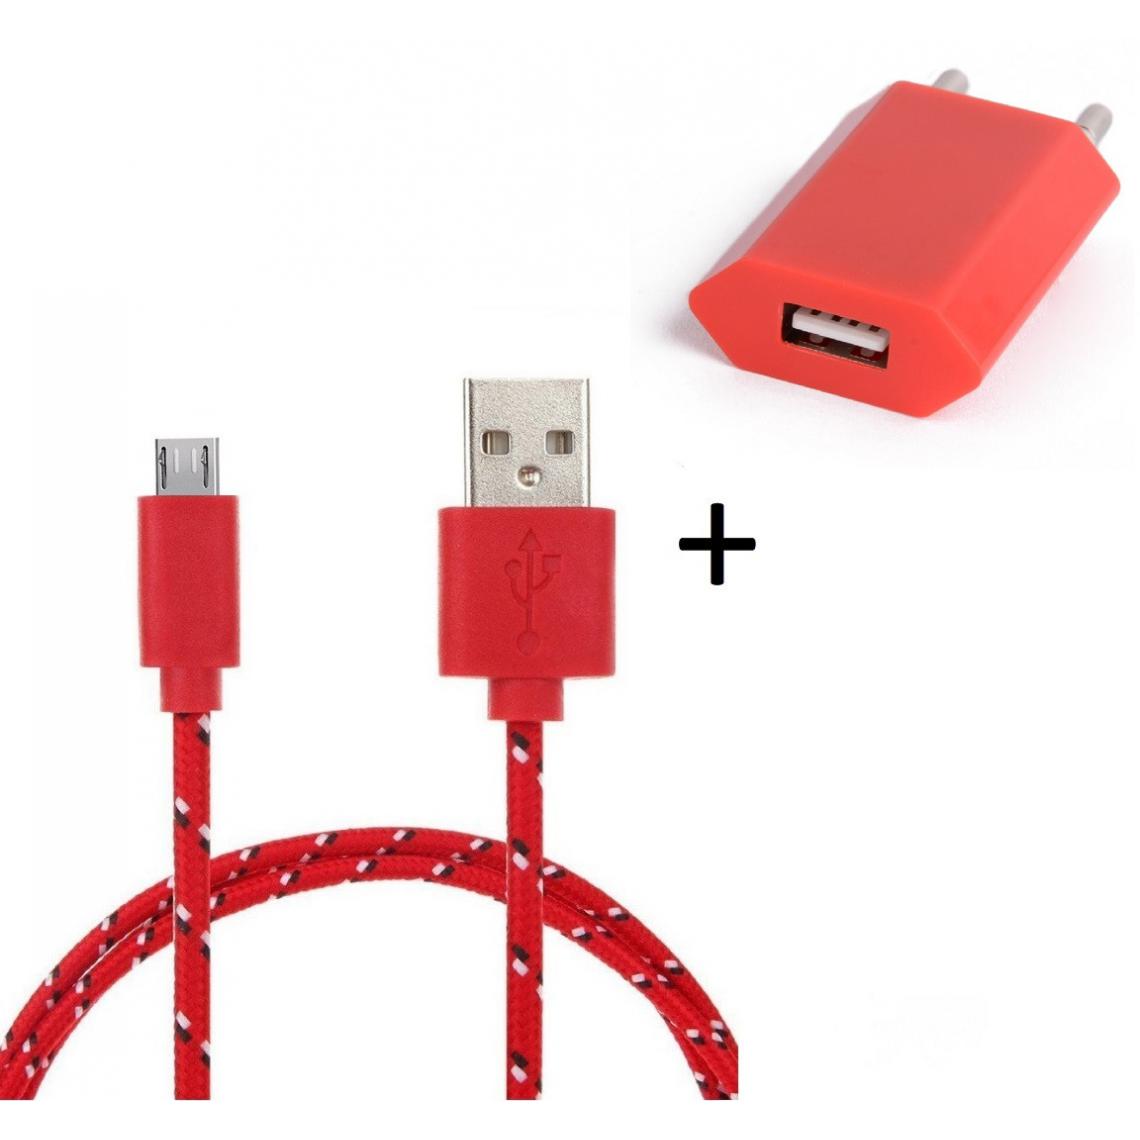 Shot - Pack Chargeur pour GIONEE F9 PLUS Smartphone Micro USB (Cable Tresse 3m Chargeur + Prise Secteur USB) Murale Android (ROUGE) - Chargeur secteur téléphone